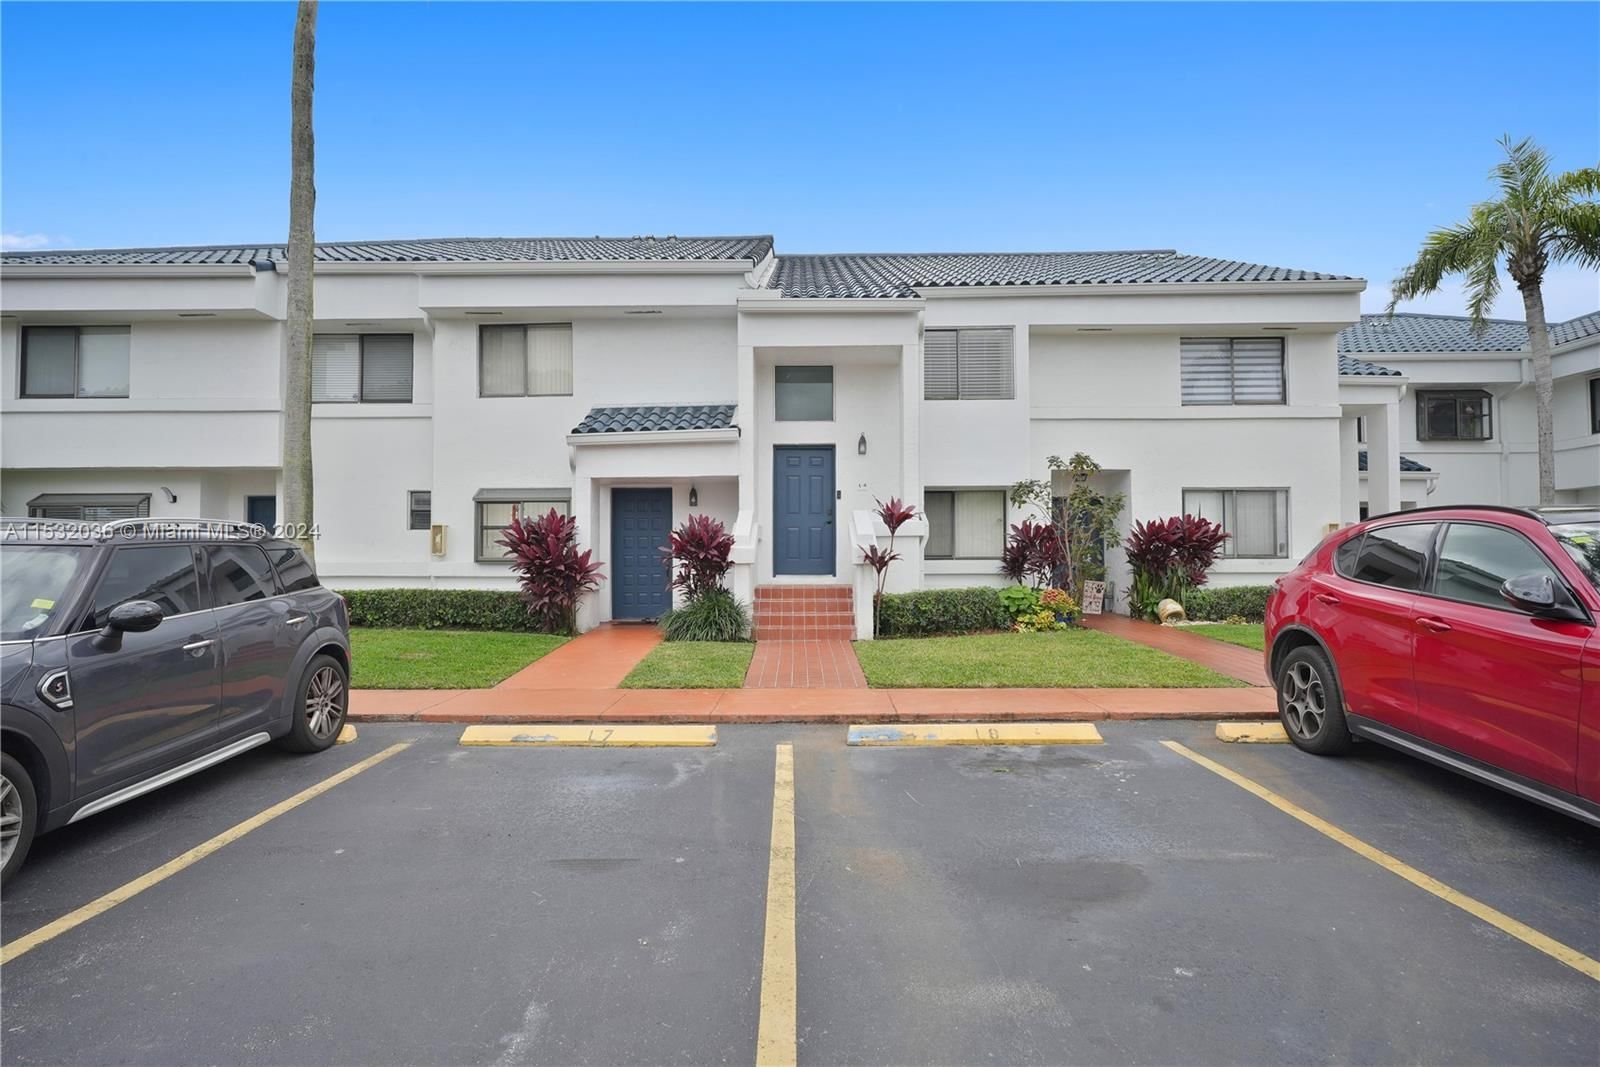 Real estate property located at 21300 San Simeon Way L4, Miami-Dade County, SAN SIMEON THE CALIF CLUB, Miami, FL